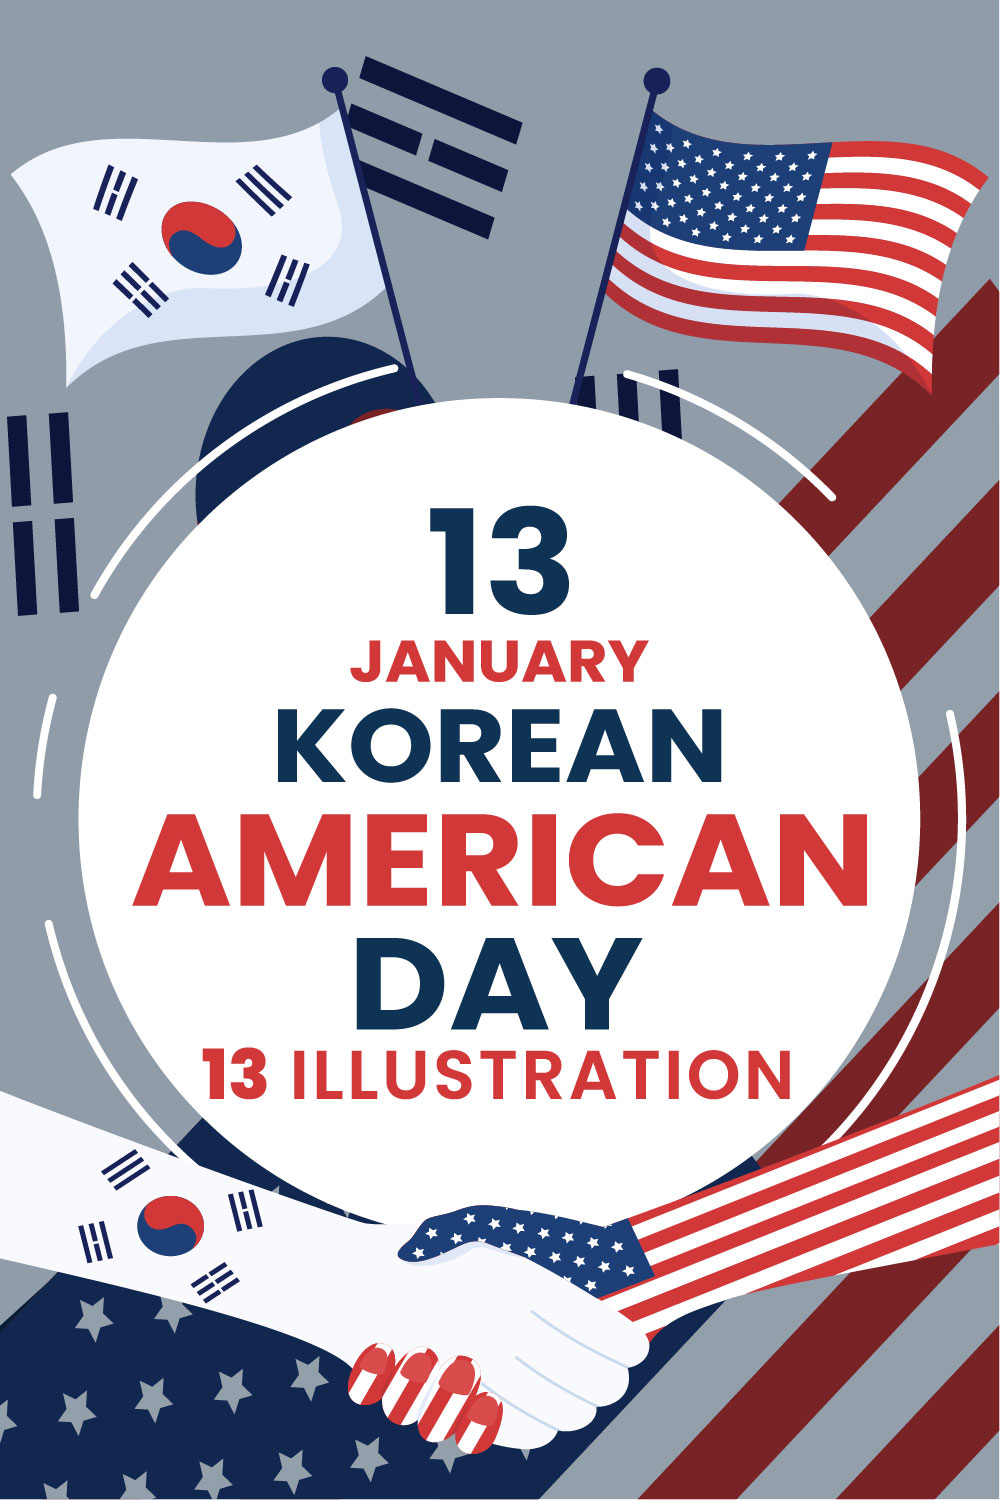 13 Korean American Day Illustration pinterest preview image.